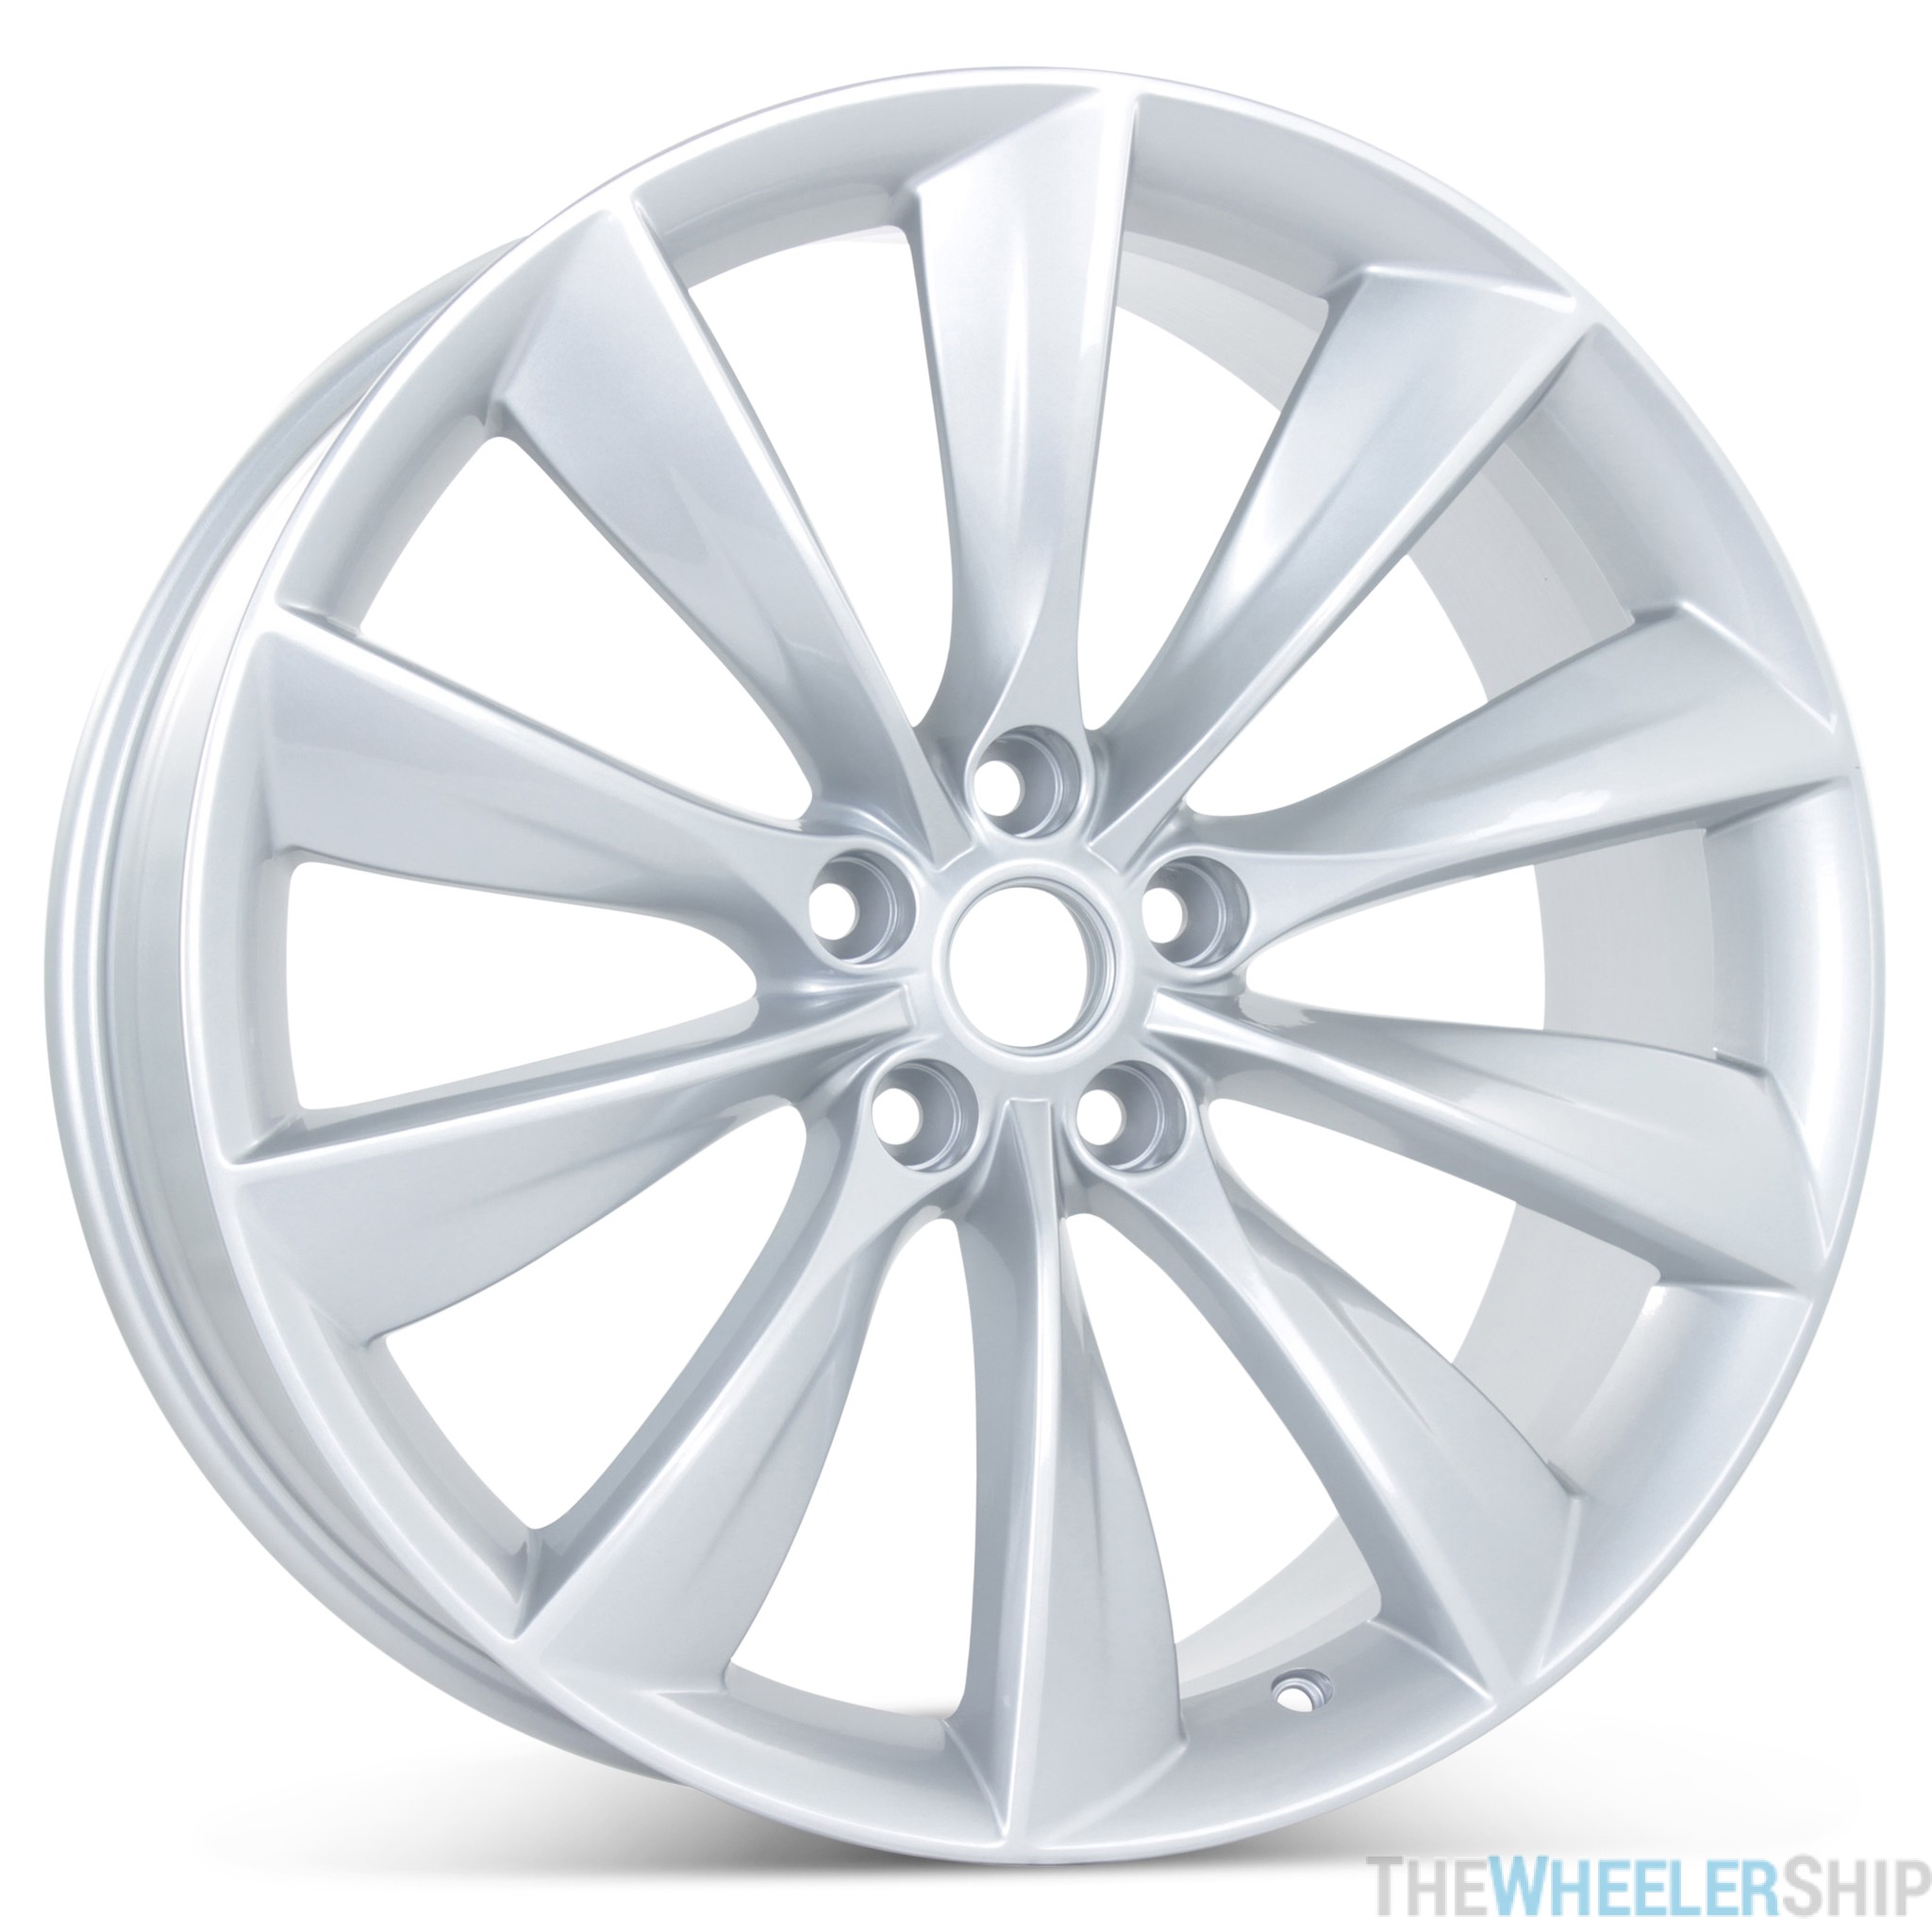 New 21 X 85 Front Wheel For Tesla Model S 2012 2013 2014 2015 2016 2017 Silver Rim 98727